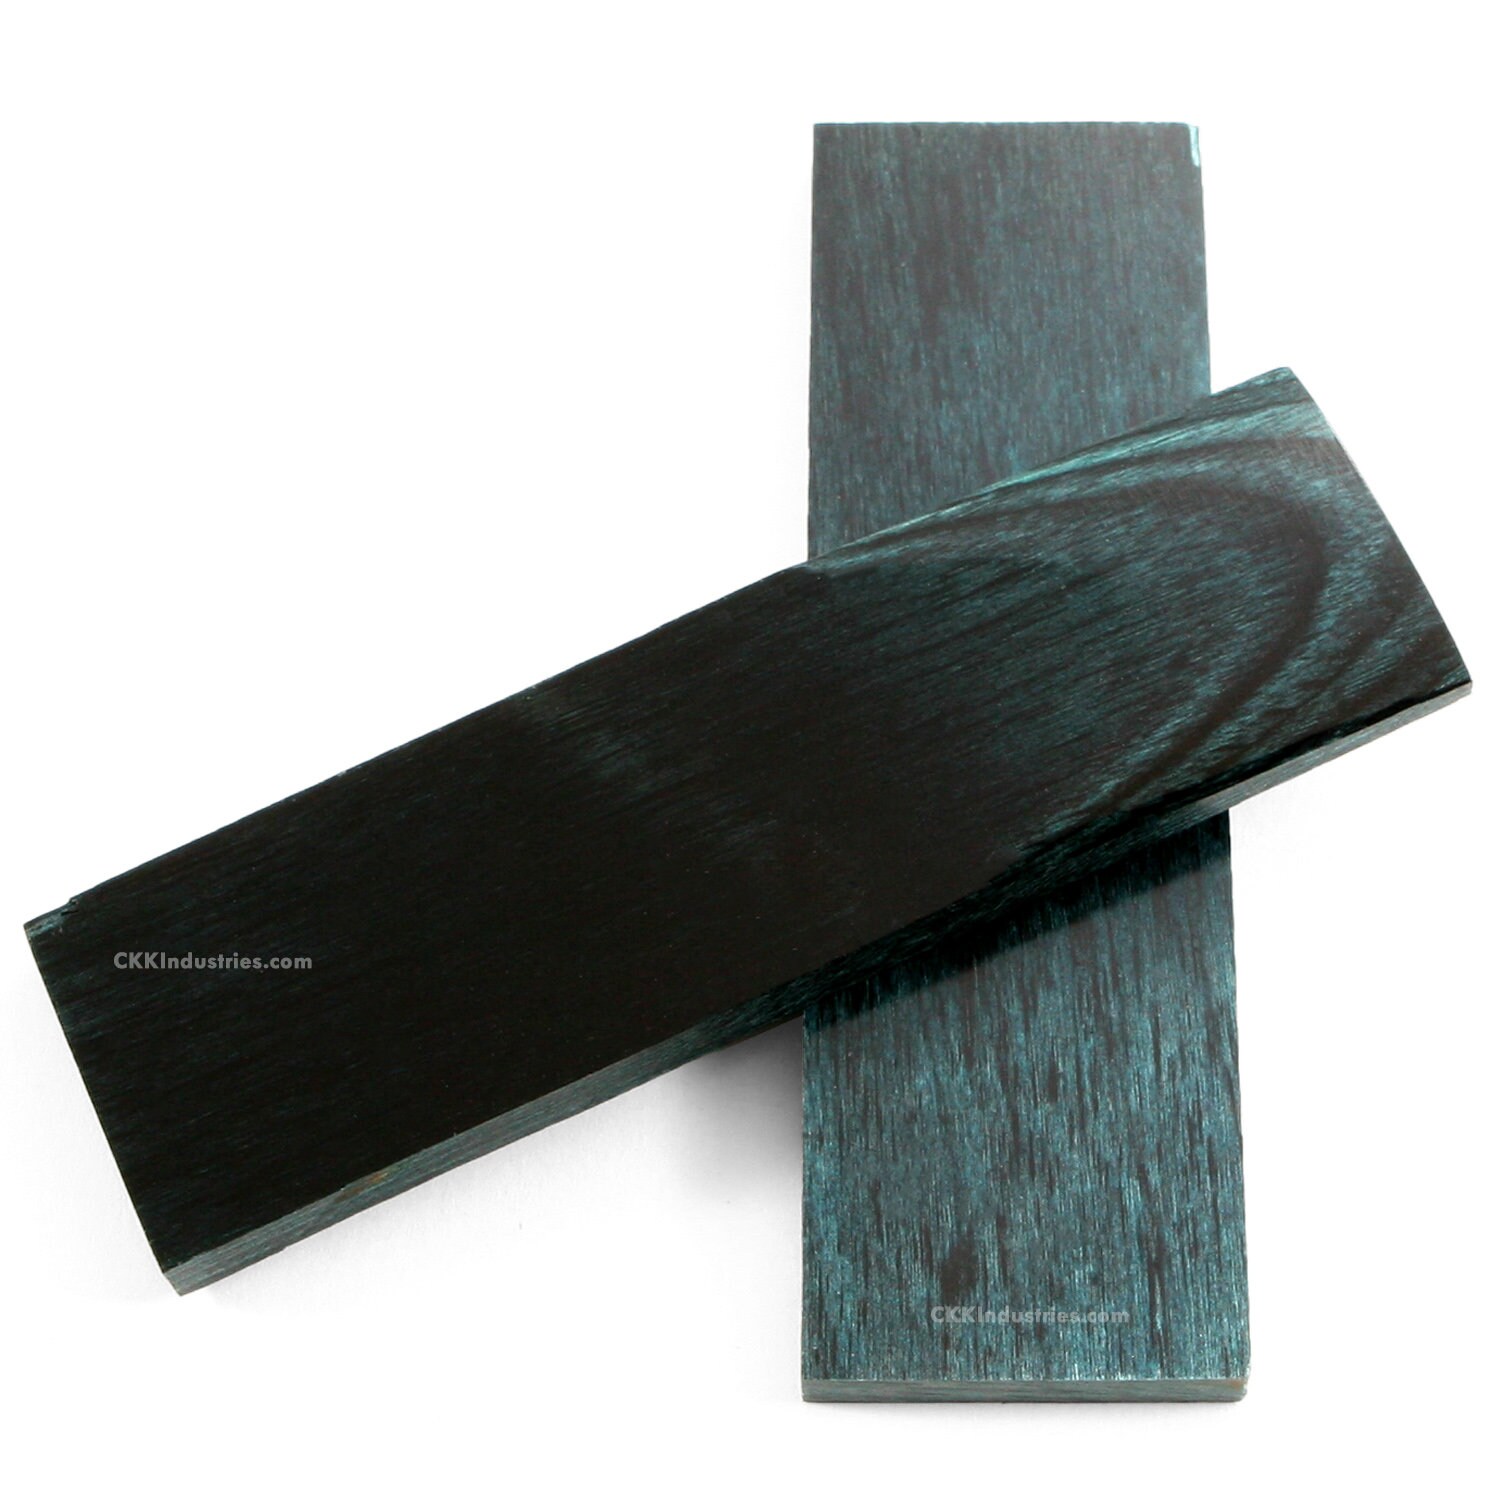 DymaLux AQUA FIRE- Laminated Wood Knife Handle Scales- 1/4 x 1.5 x 5